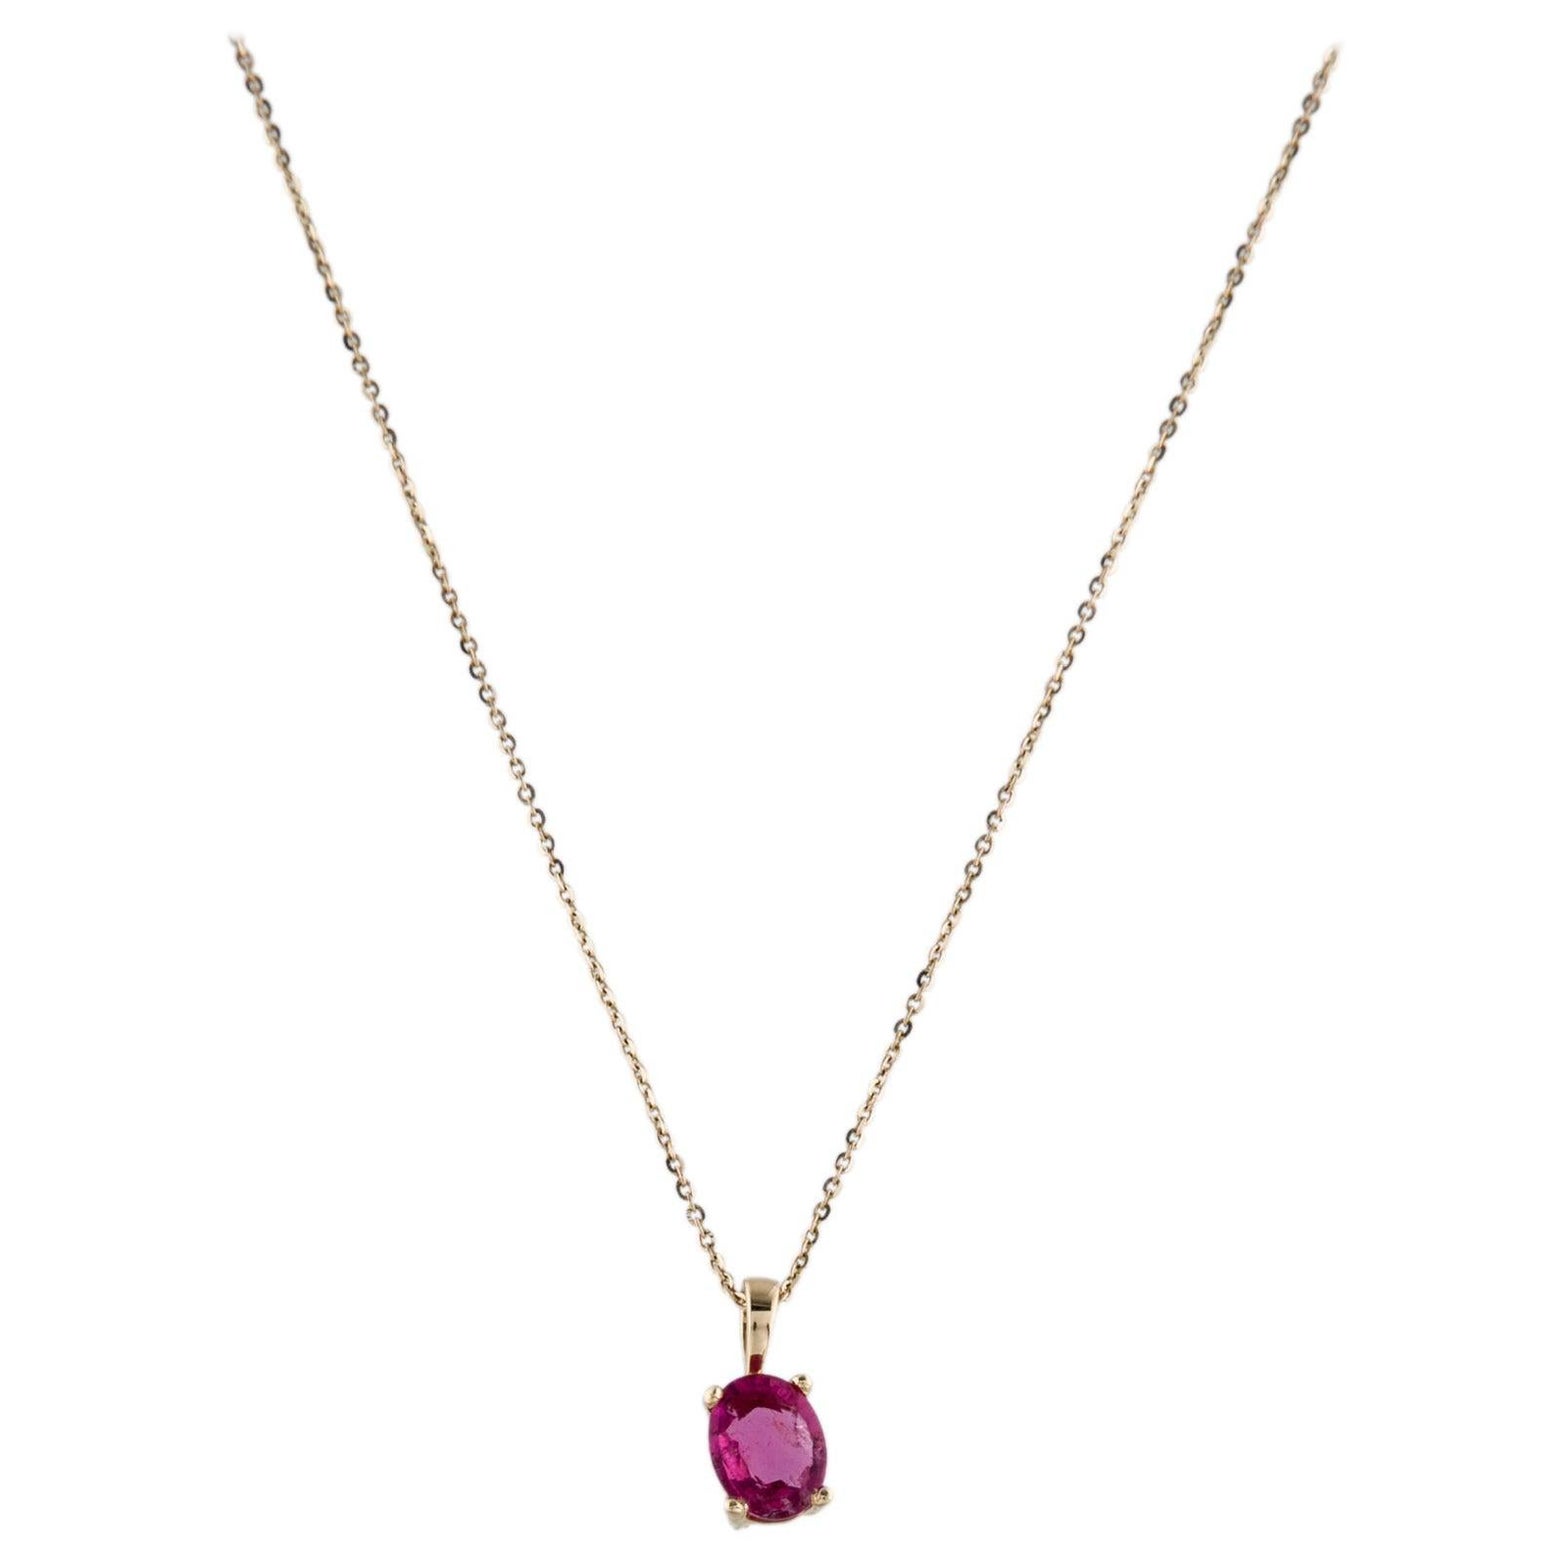 14K 0.78ctw Tourmaline Pendant Necklace - Elegant Gemstone Statement Jewelry For Sale